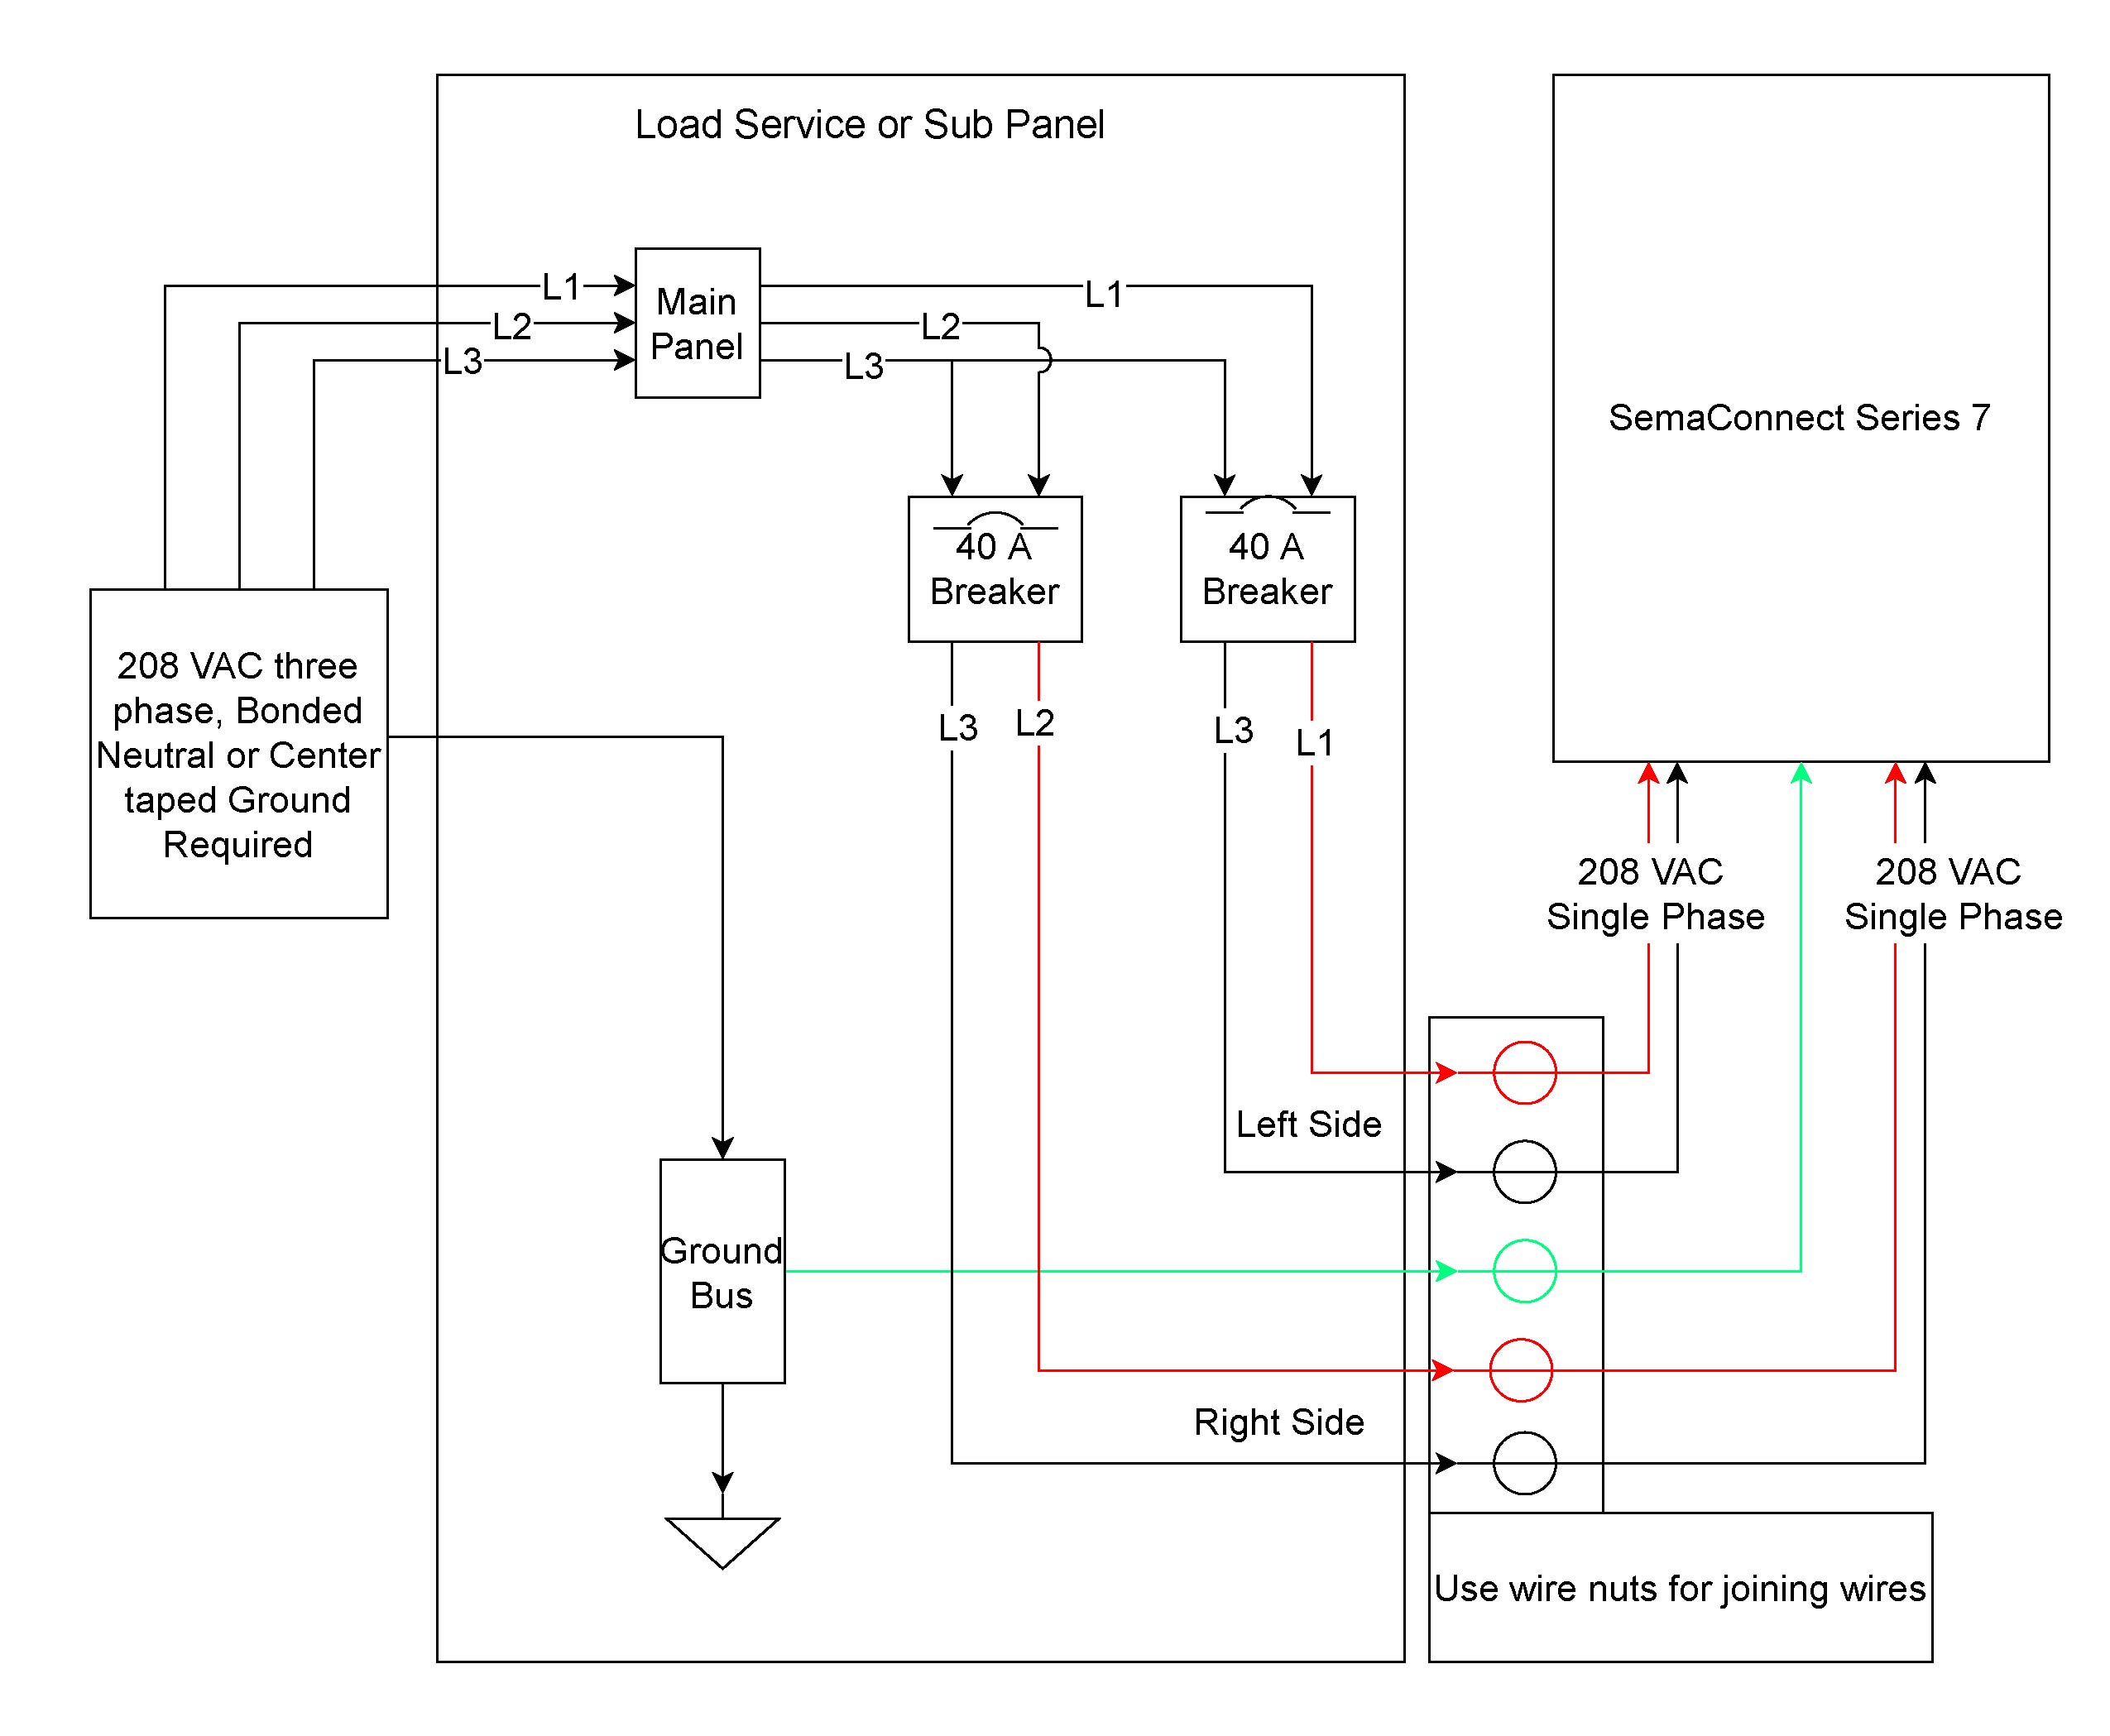 sussman es-72 electric steam boiler wiring diagram